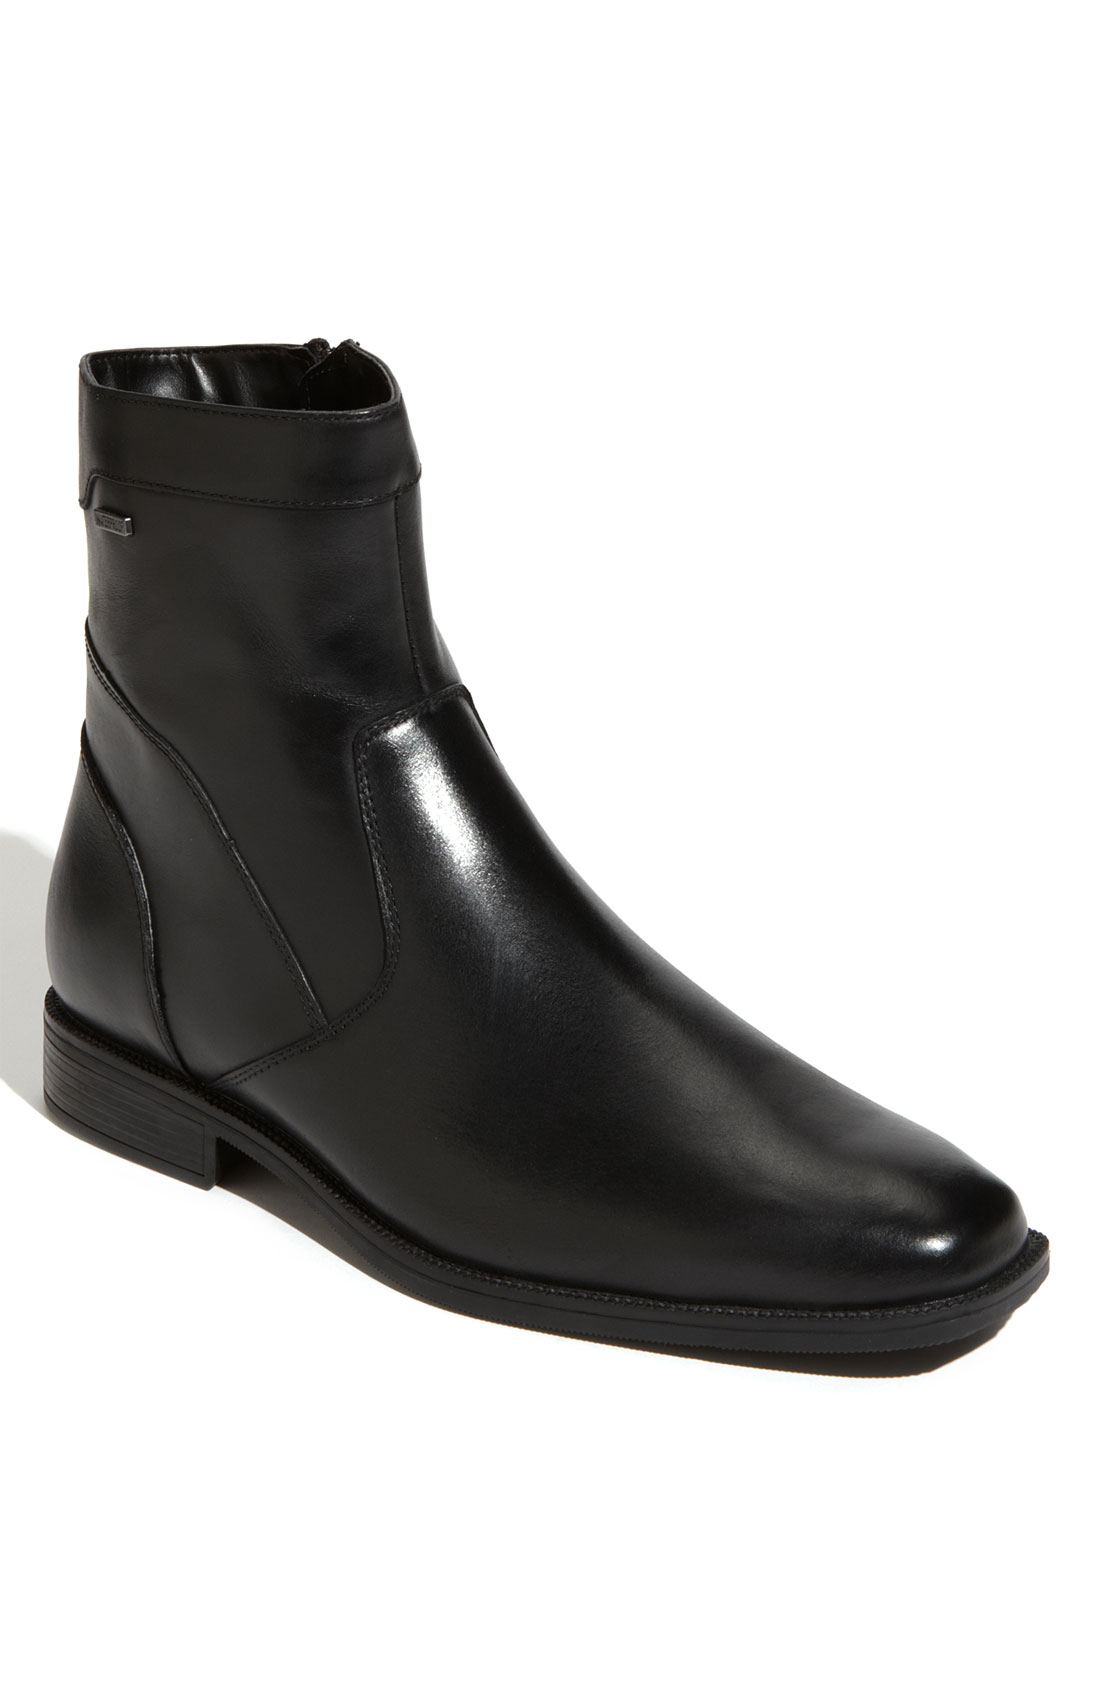 Blondo 'Valerio' Waterproof Boot in Black for Men (start of color list ...